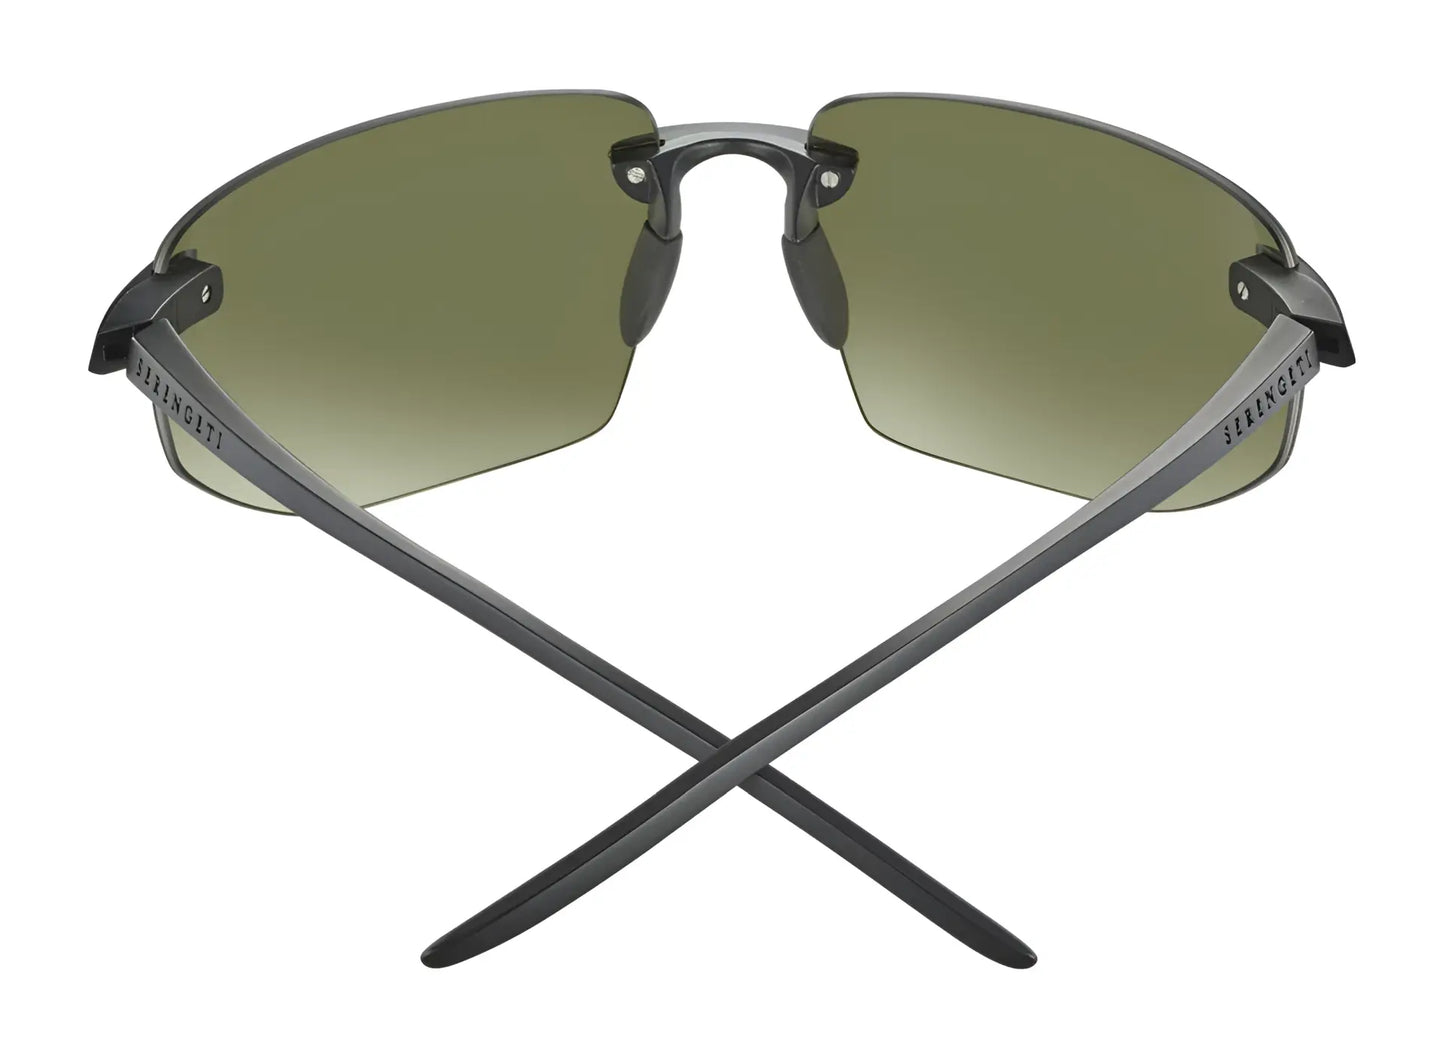 Serengeti LUPTON Sunglasses | Size 67